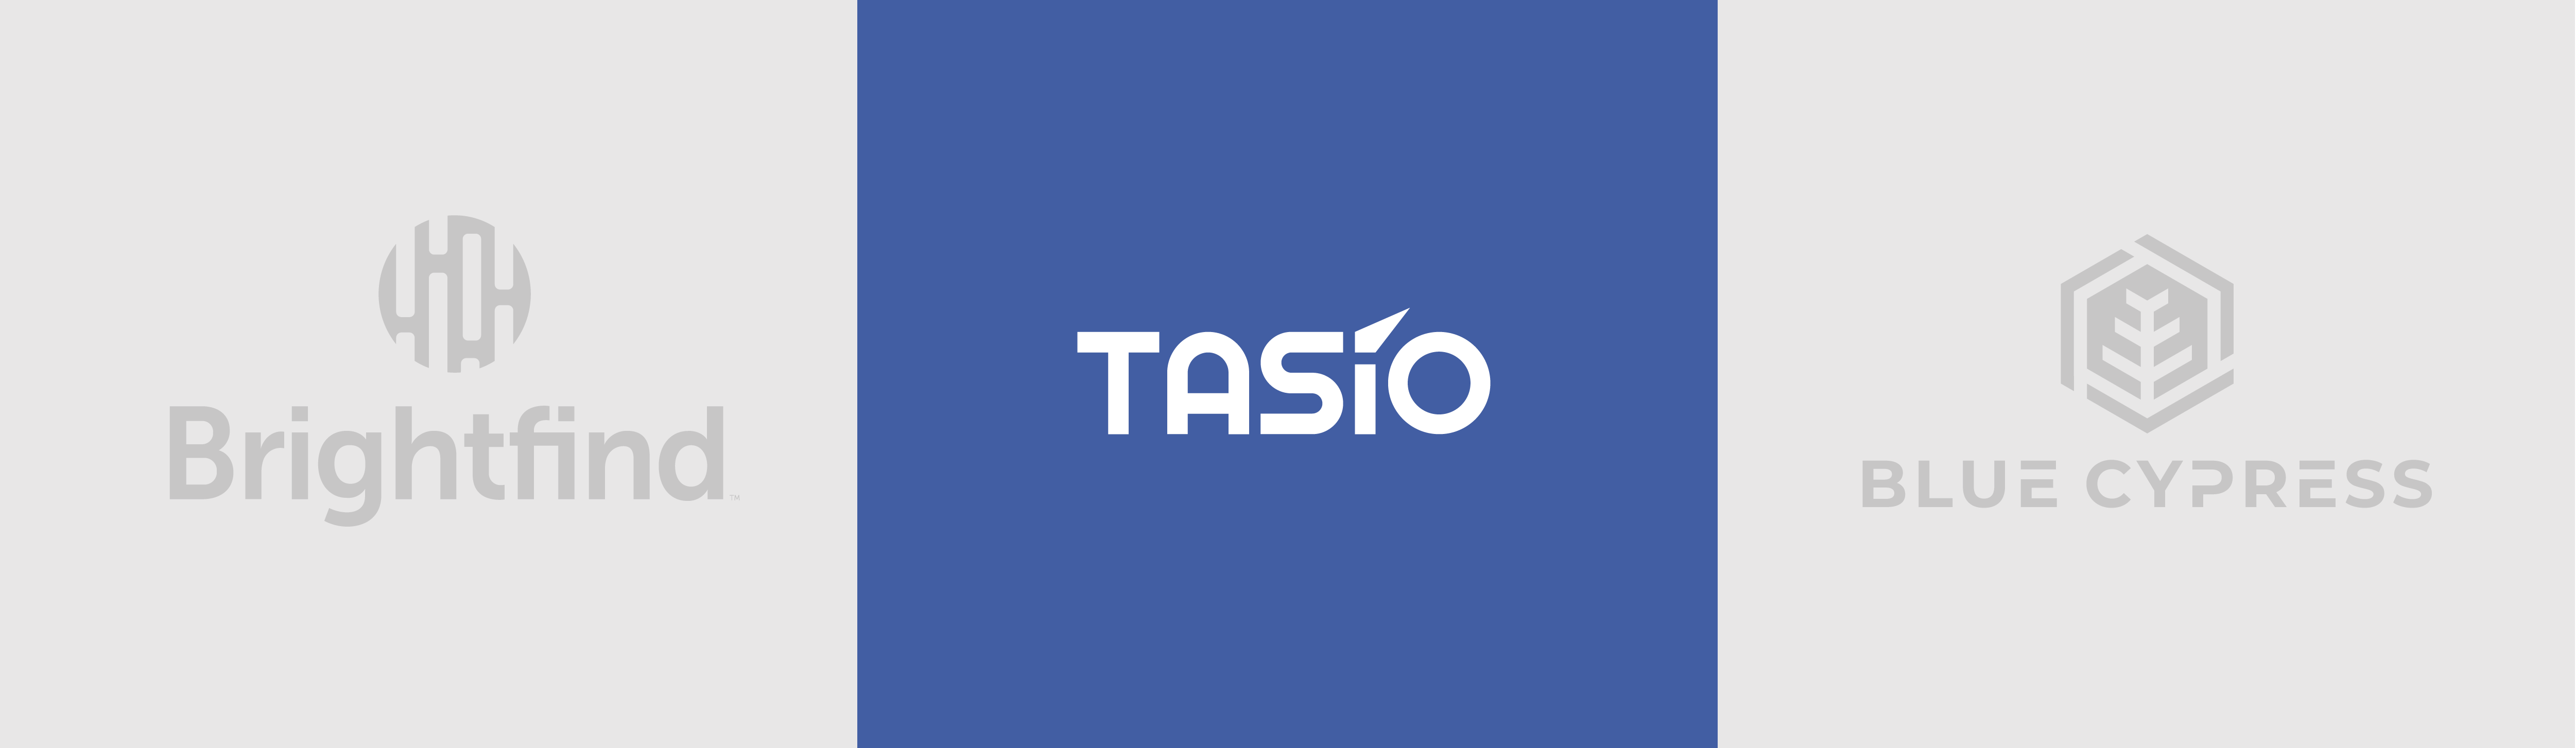 Tasio-Active-Logo-copy